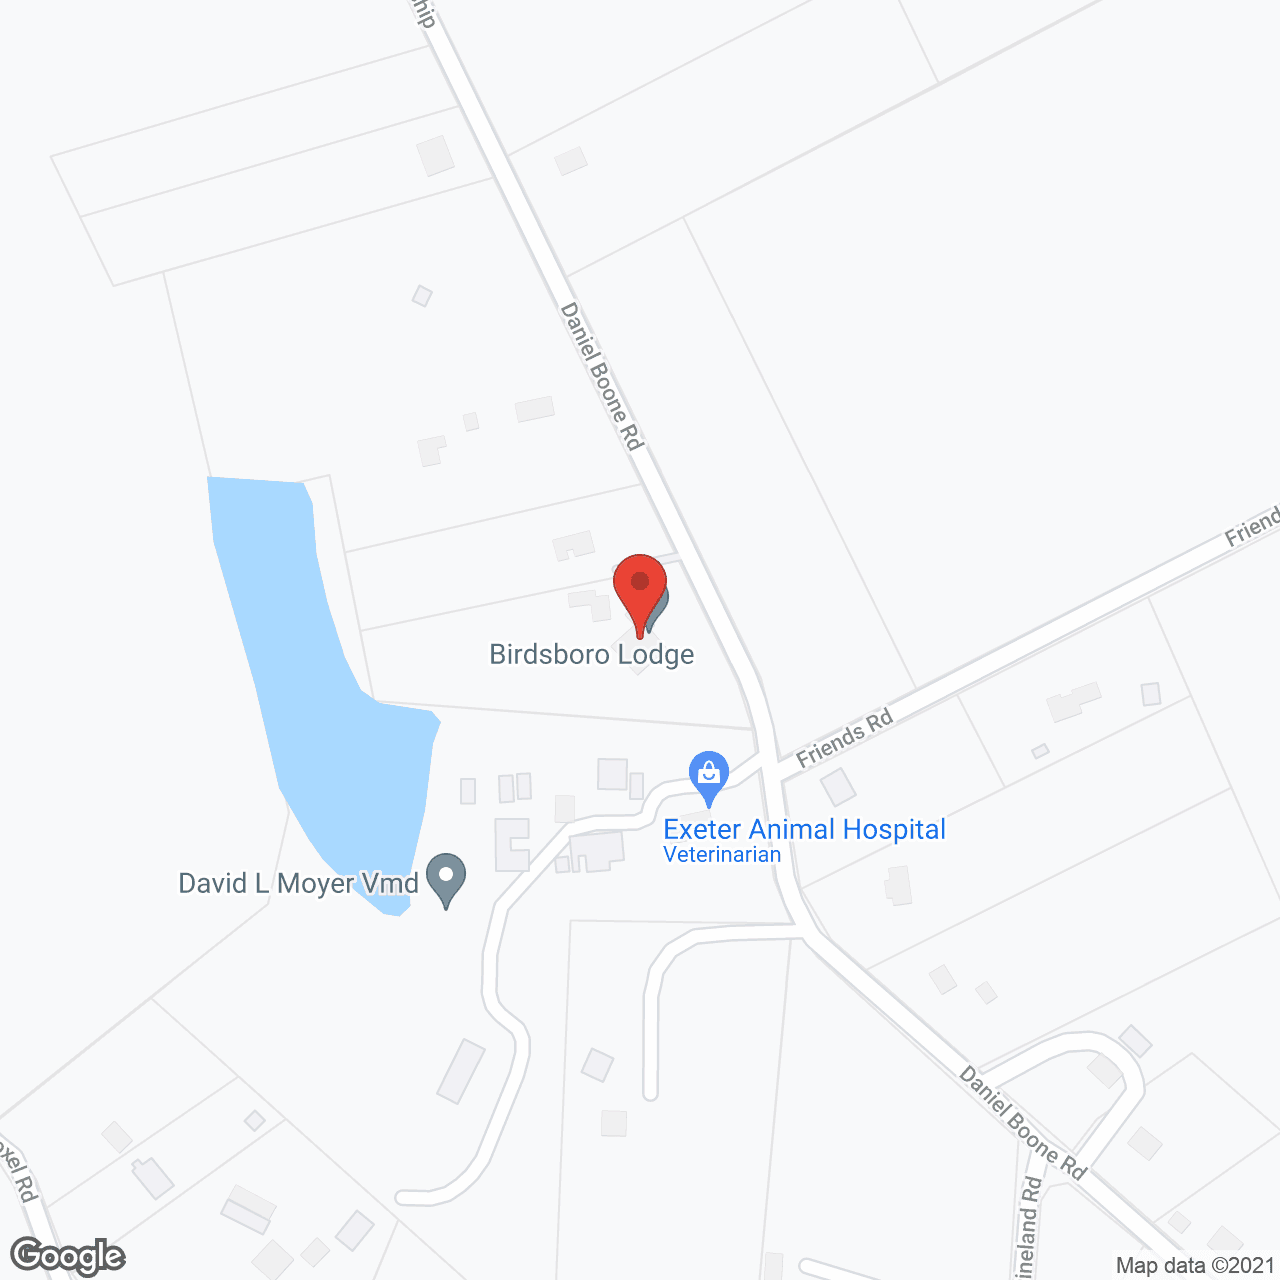 Birdsboro Lodge in google map